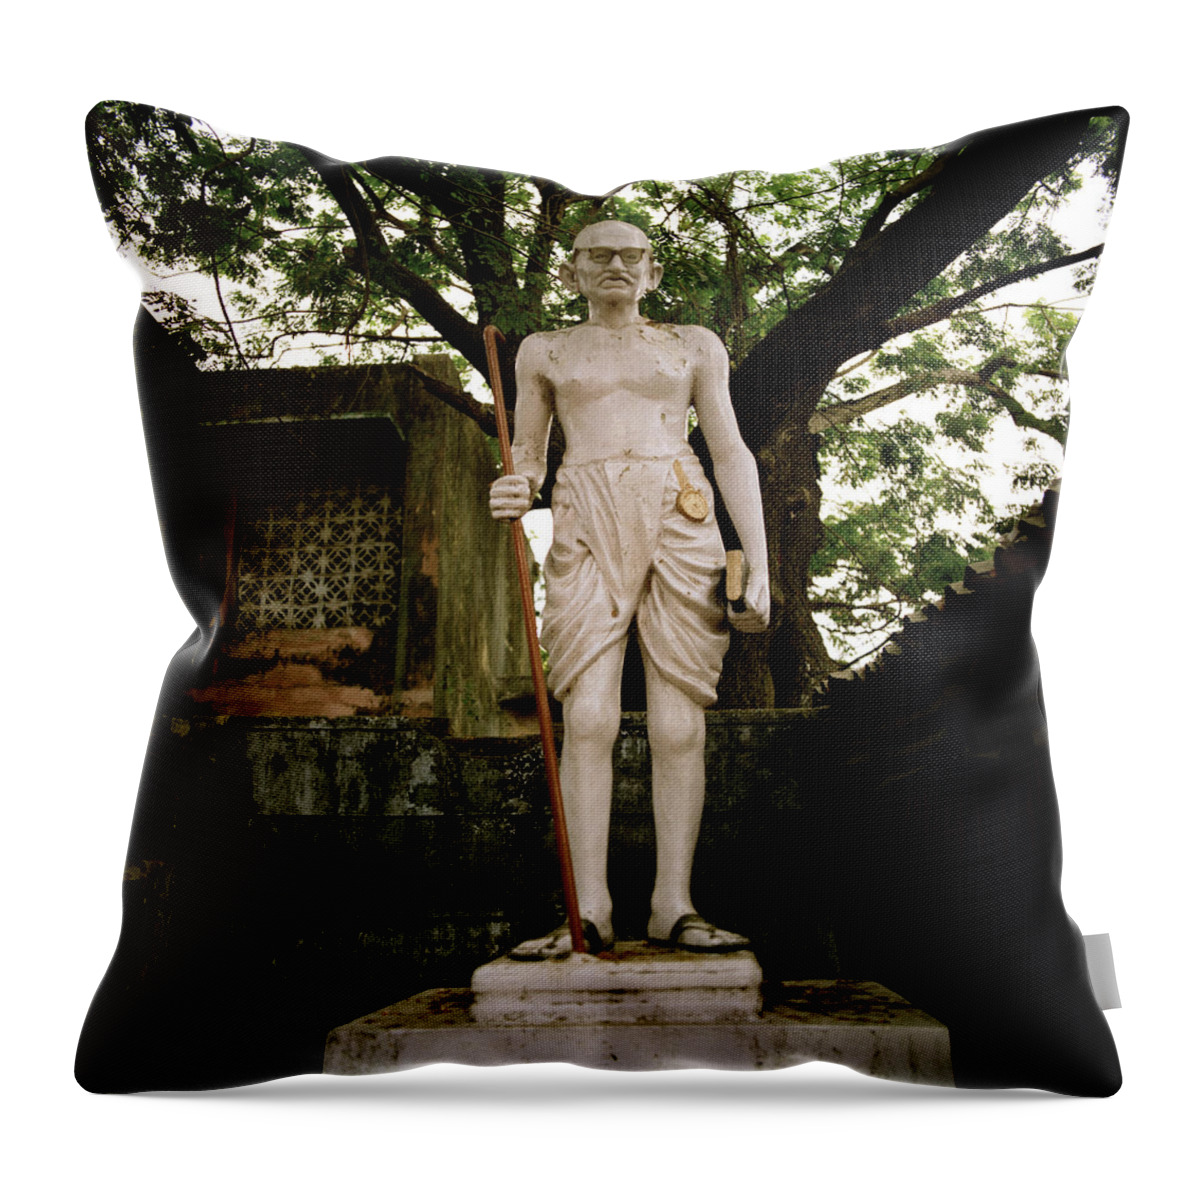 Humility Throw Pillow featuring the photograph Mahatma Gandhi by Shaun Higson